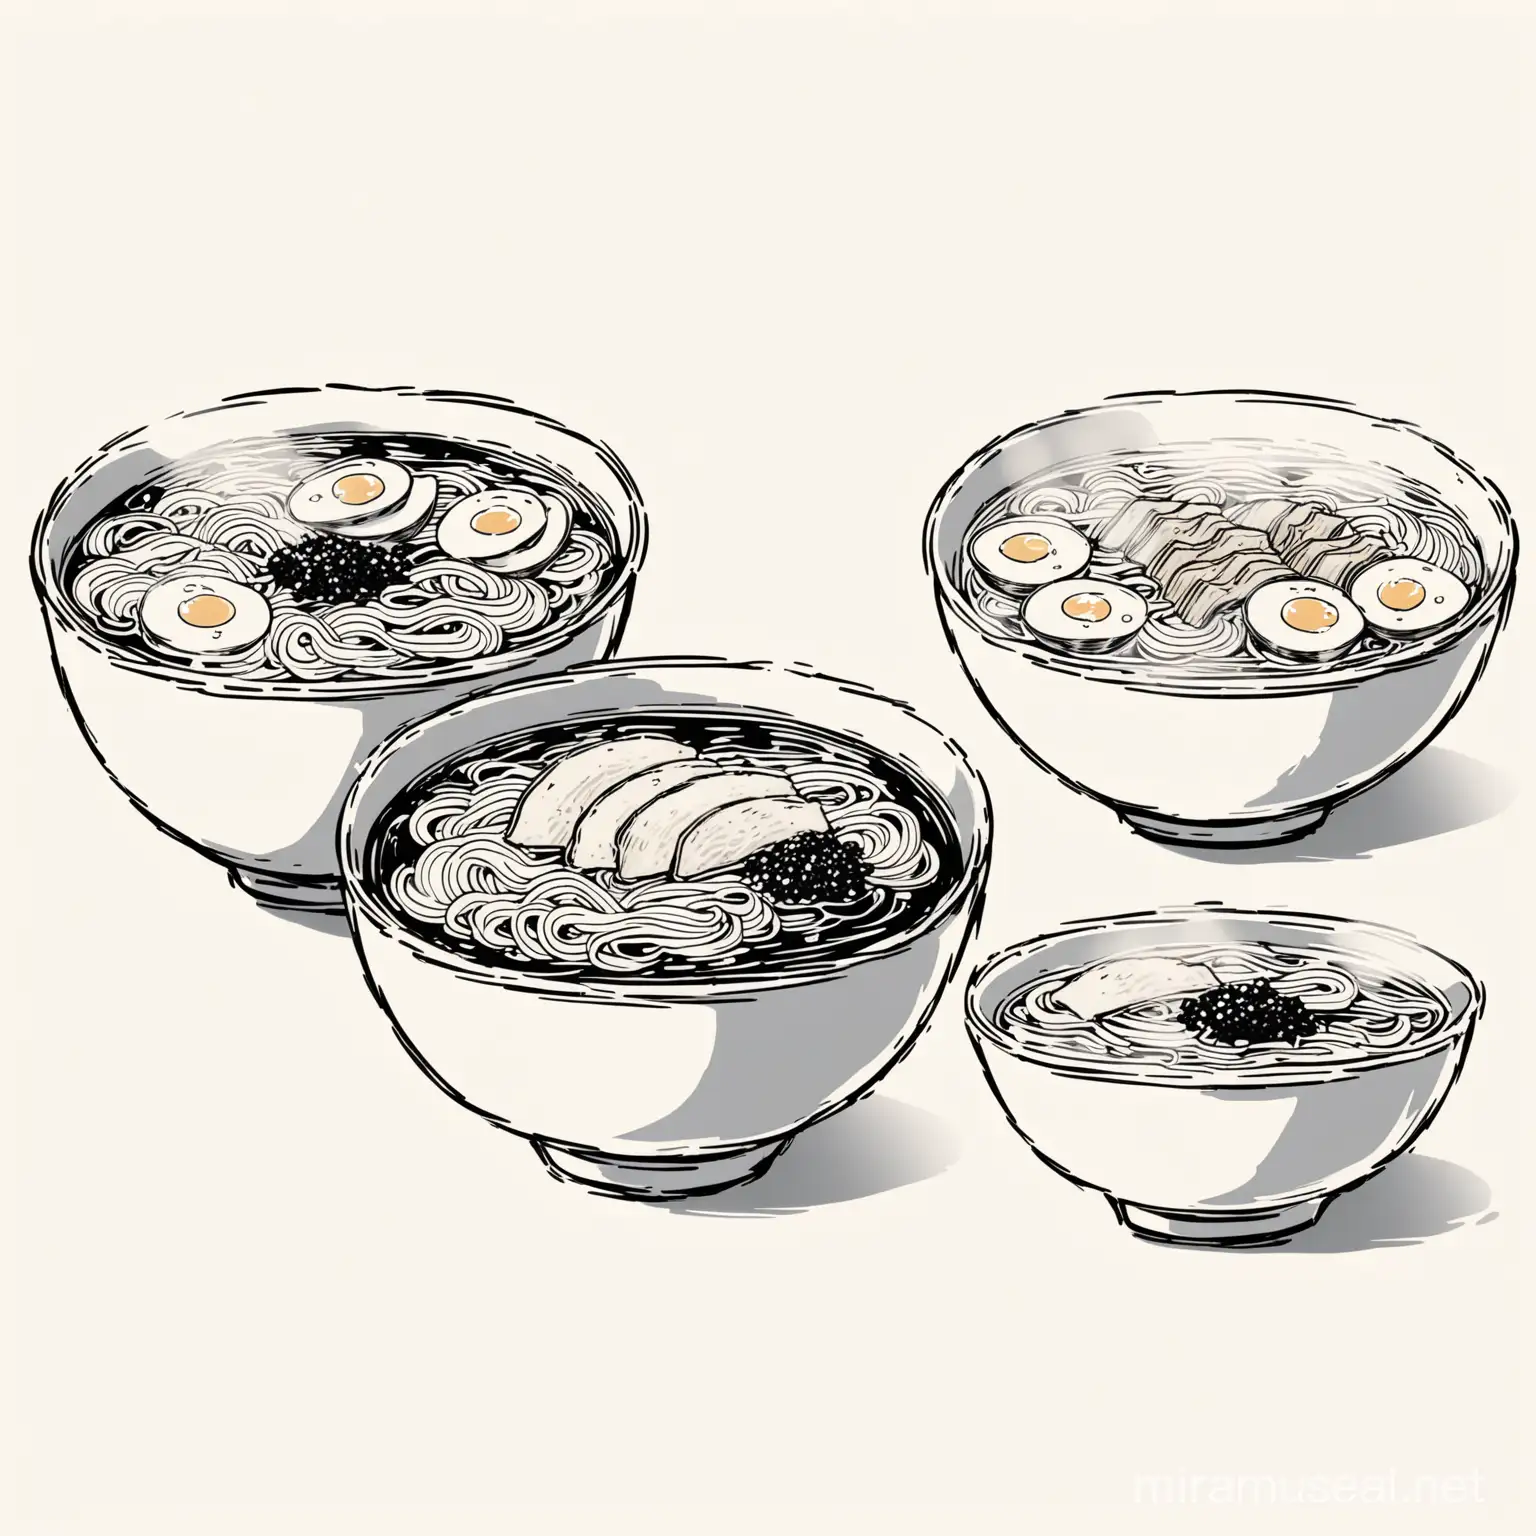 Minimalist Black and White Ramen Bowl Sketches